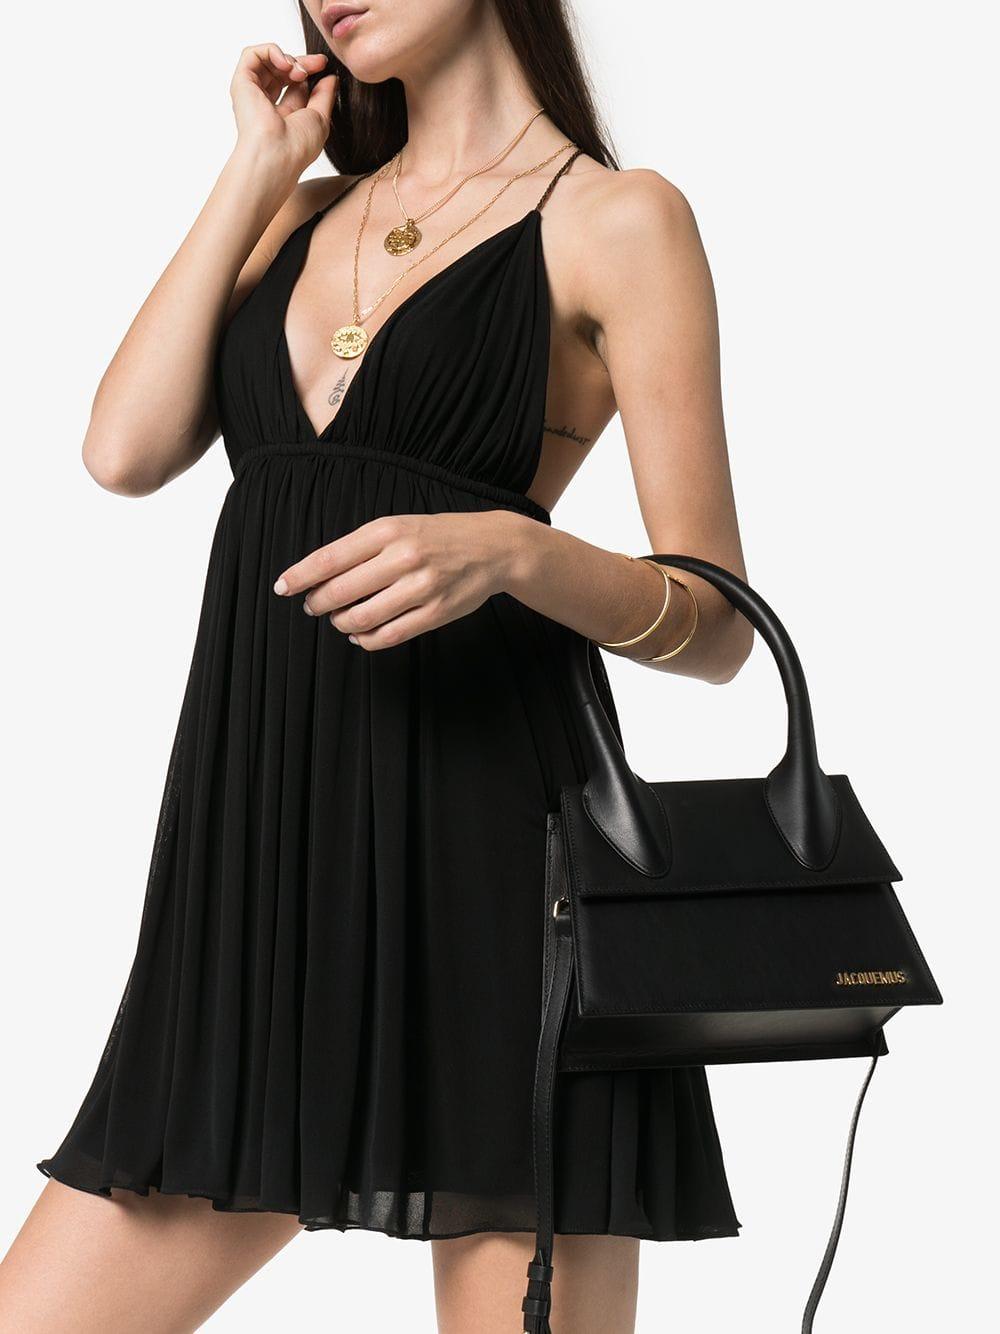 Jacquemus Le Chiquito Large Straw Handbag in Black | Lyst